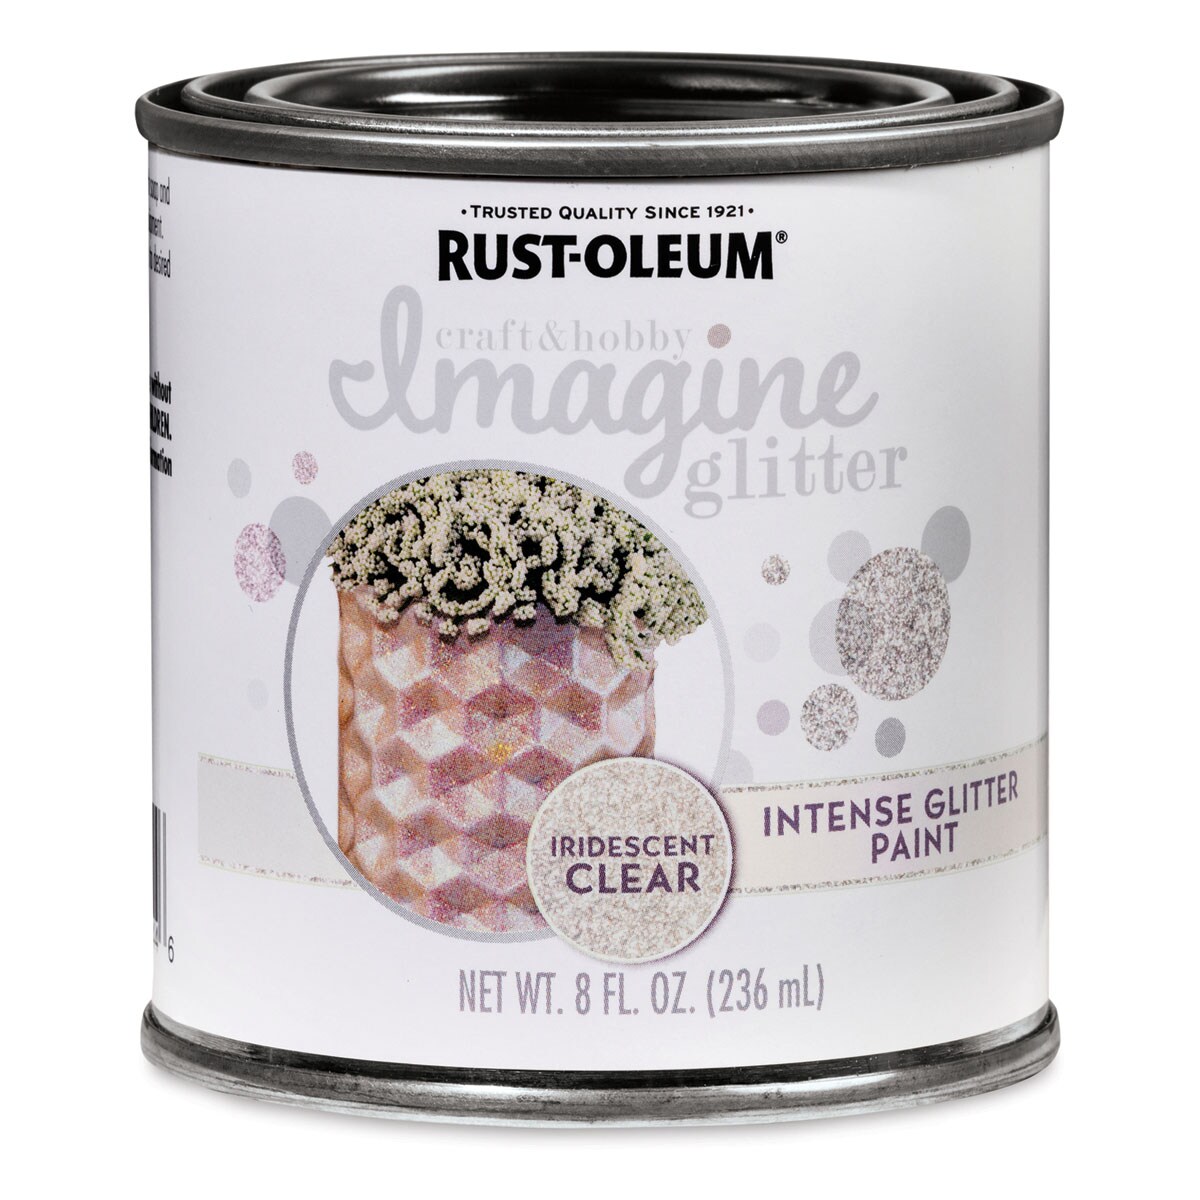 Rust-Oleum Imagine Intense Glitter Paint - Iridescent, 8 oz